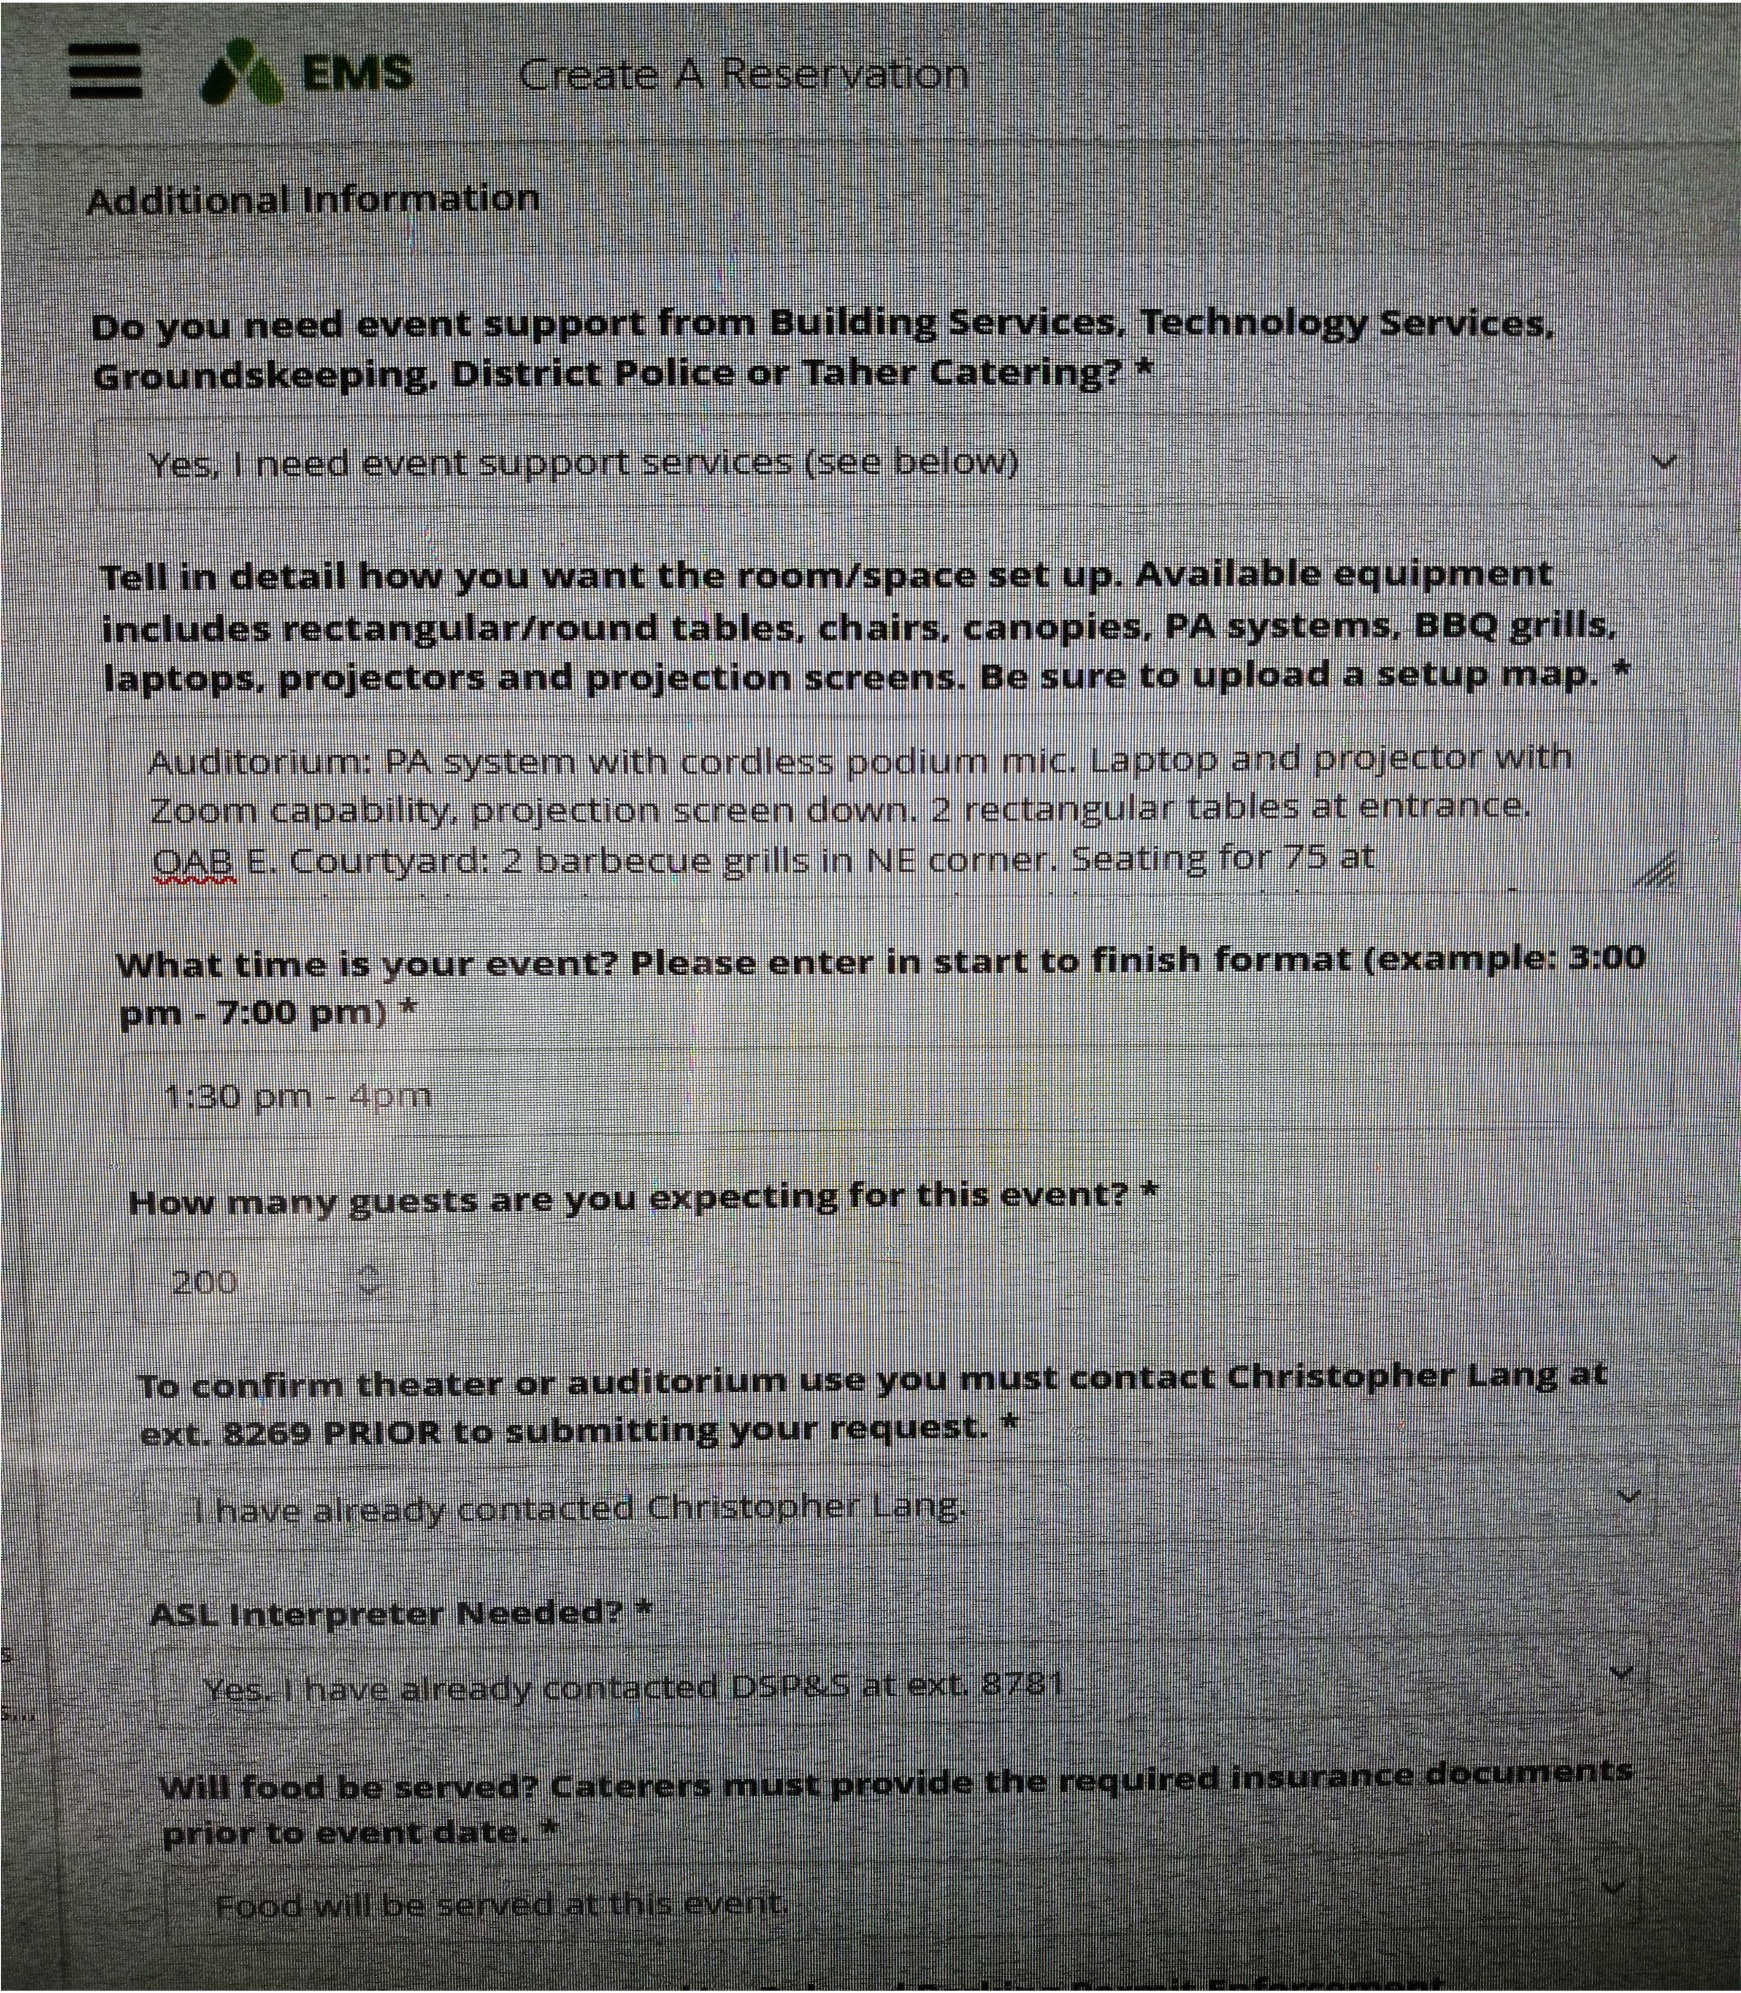 screenshot of additional information form